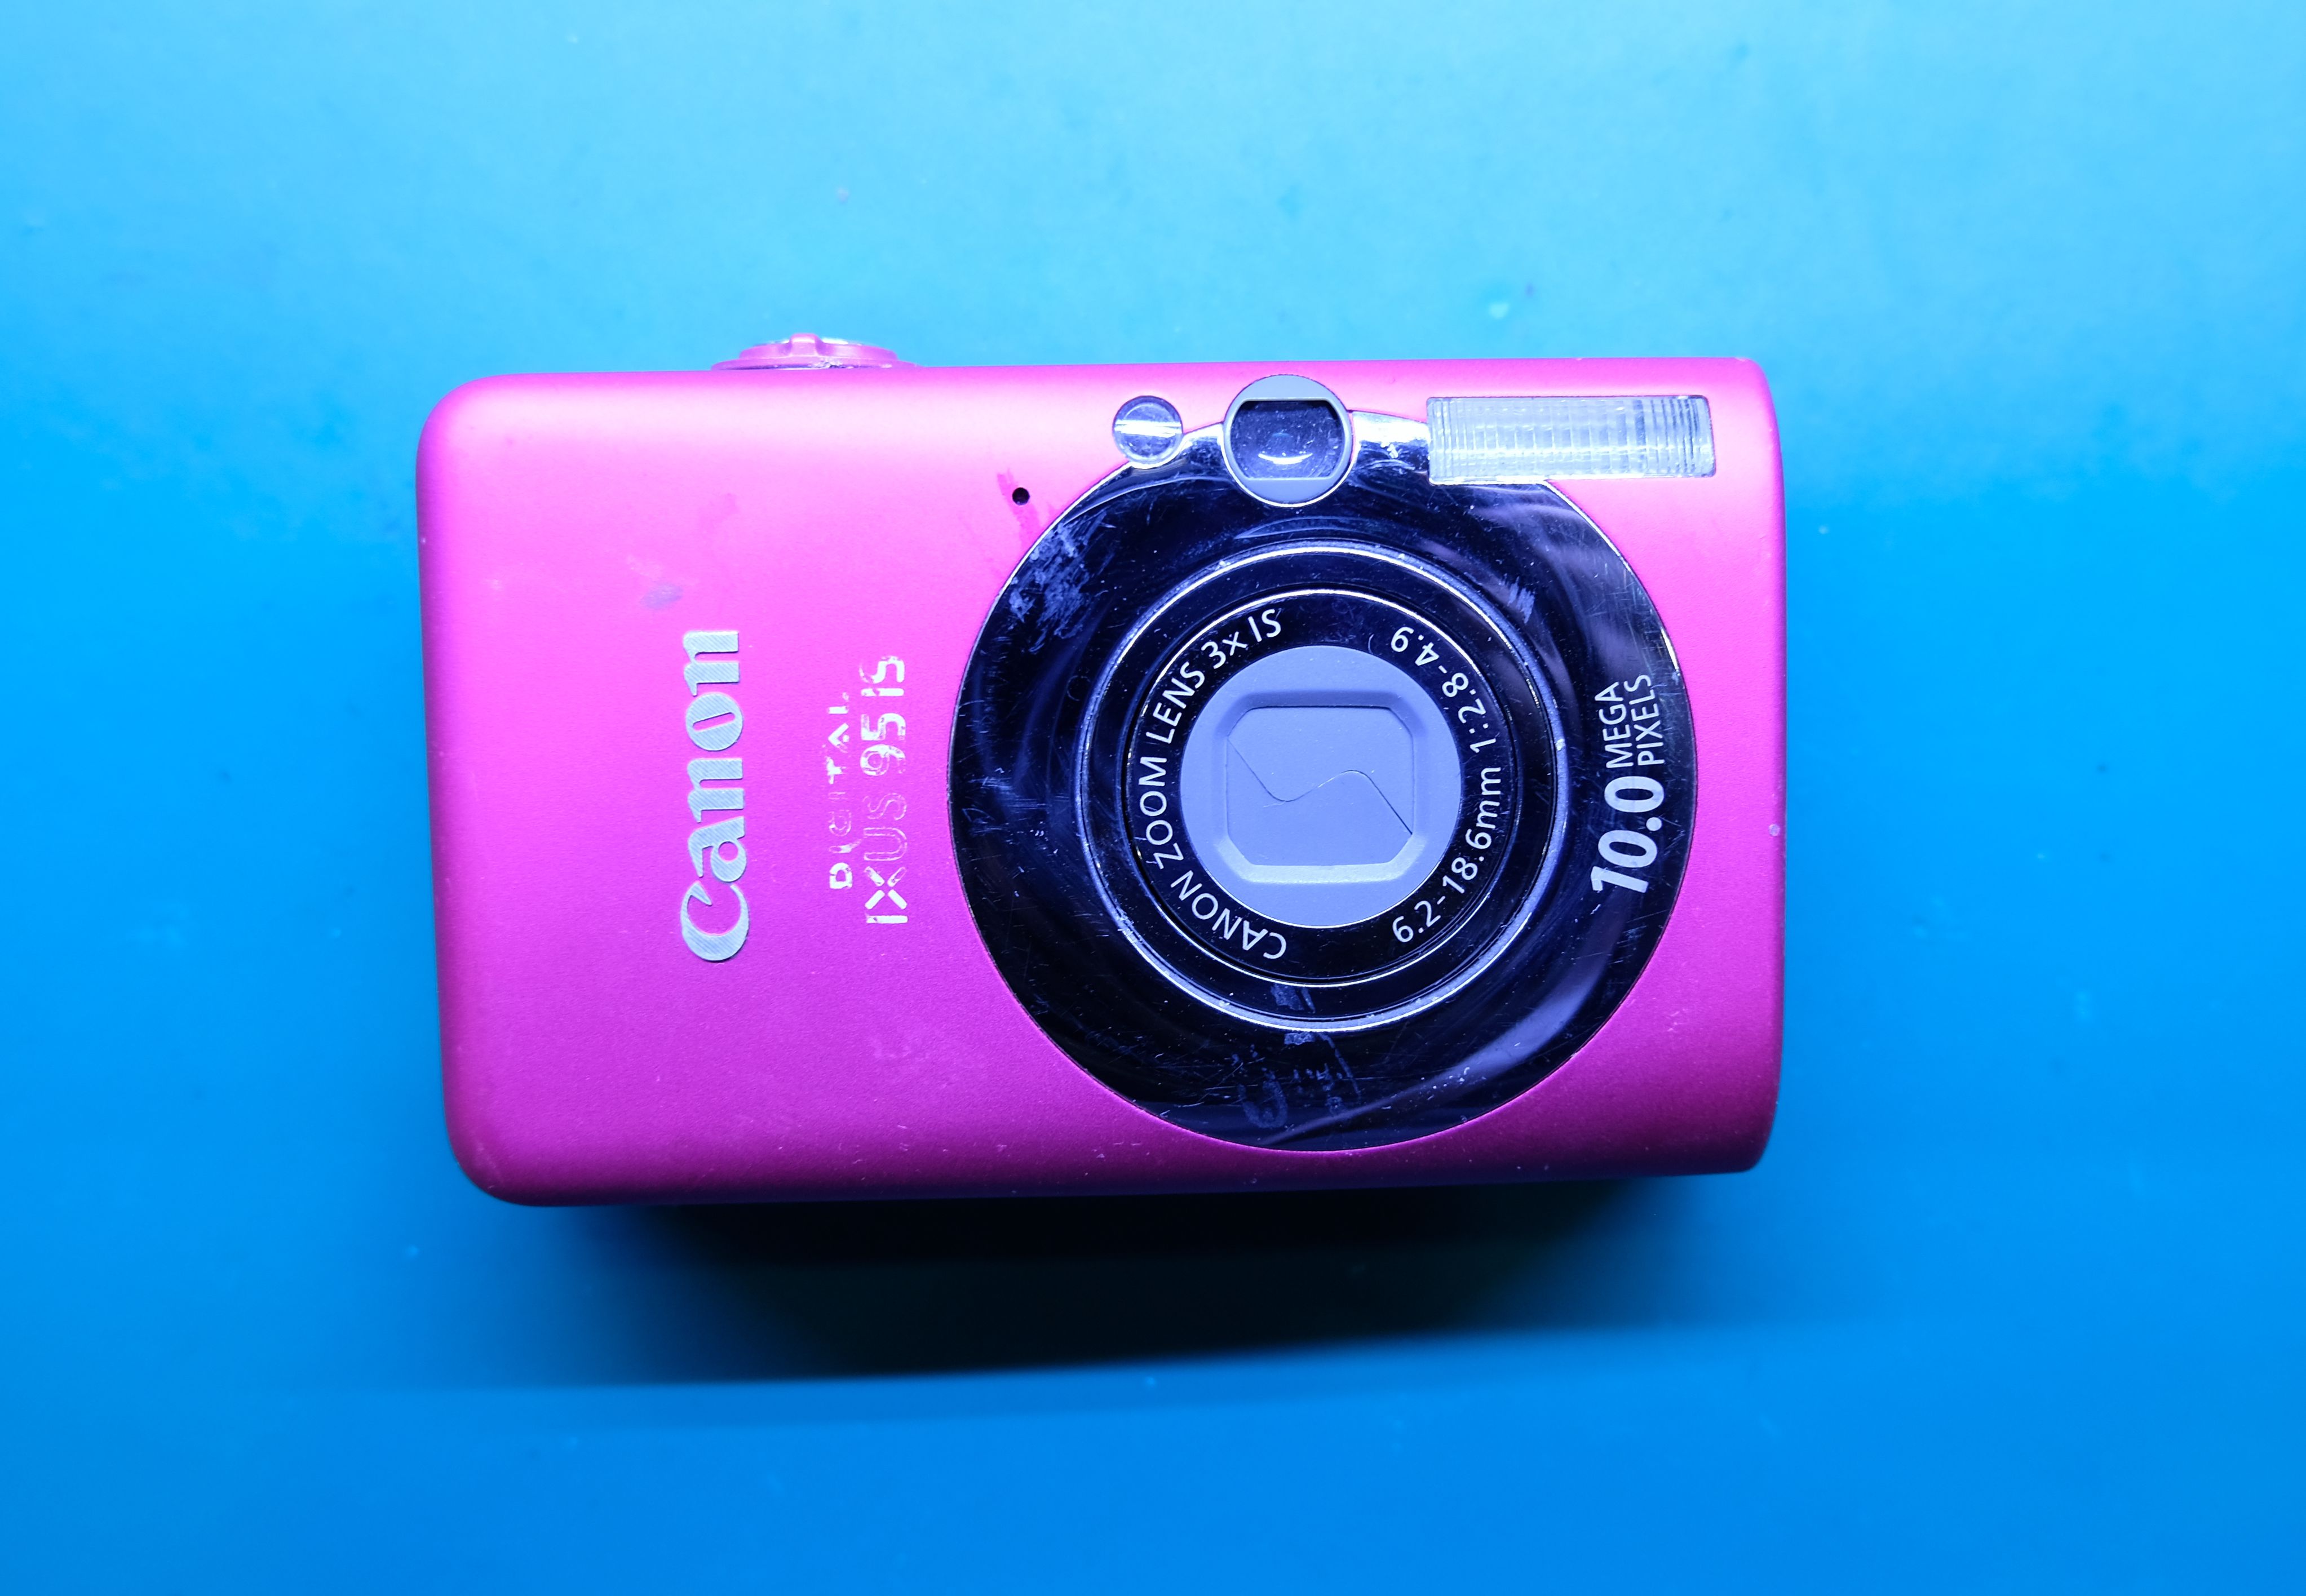 Canon PowerShot SD100 (Digital IXUS II) Review: Digital Photography Review